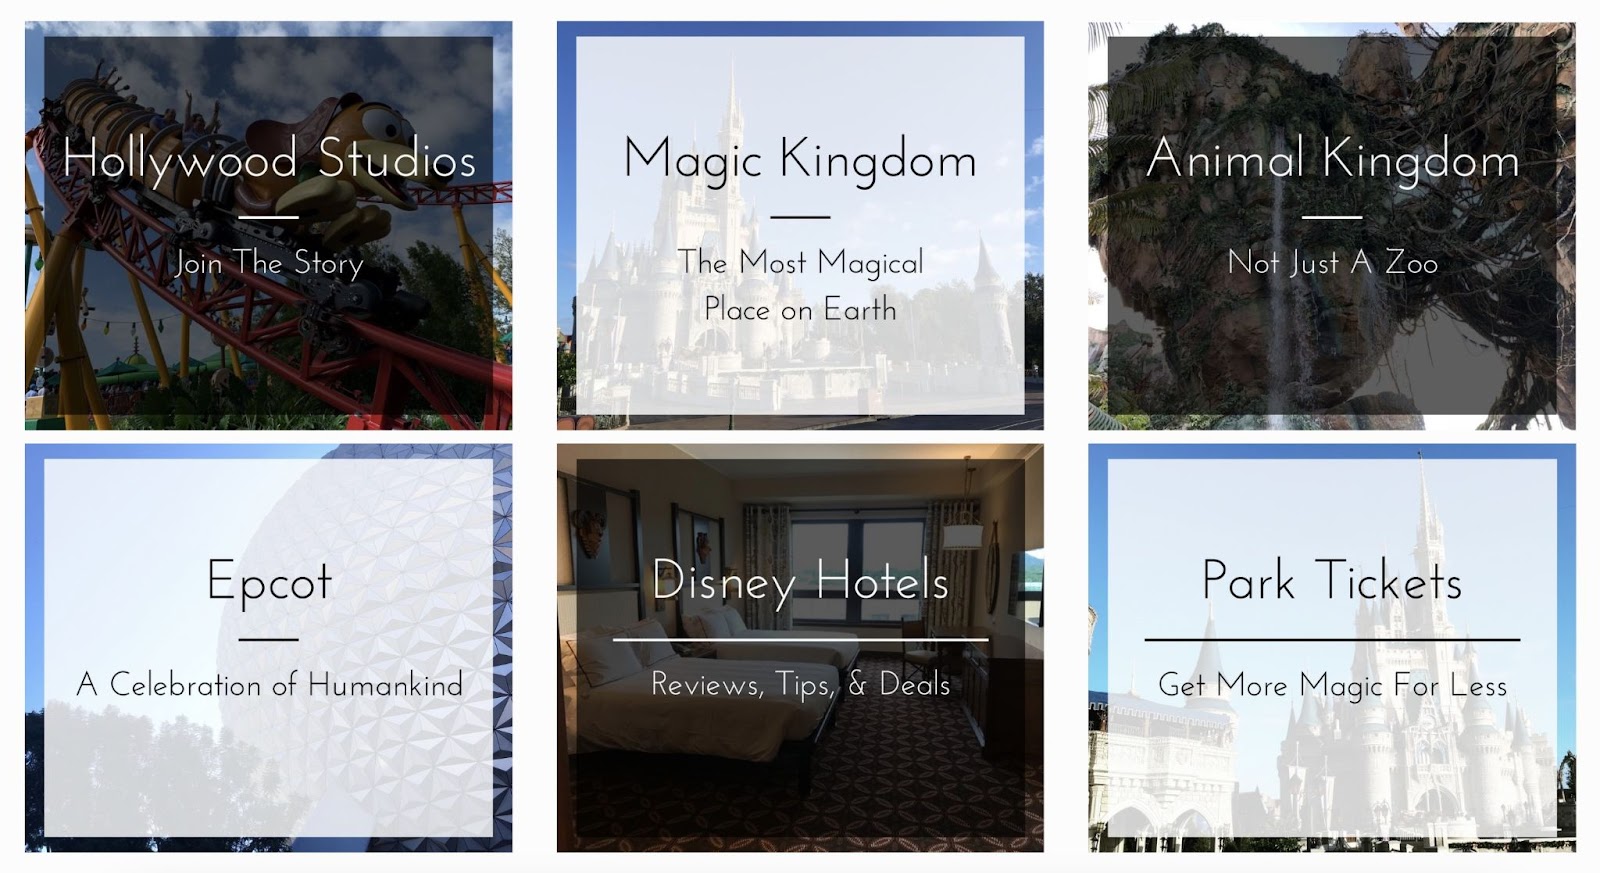 Image links to guides about Hollywood Studios, Magic Kingdom, Animal Kingdom, etc.